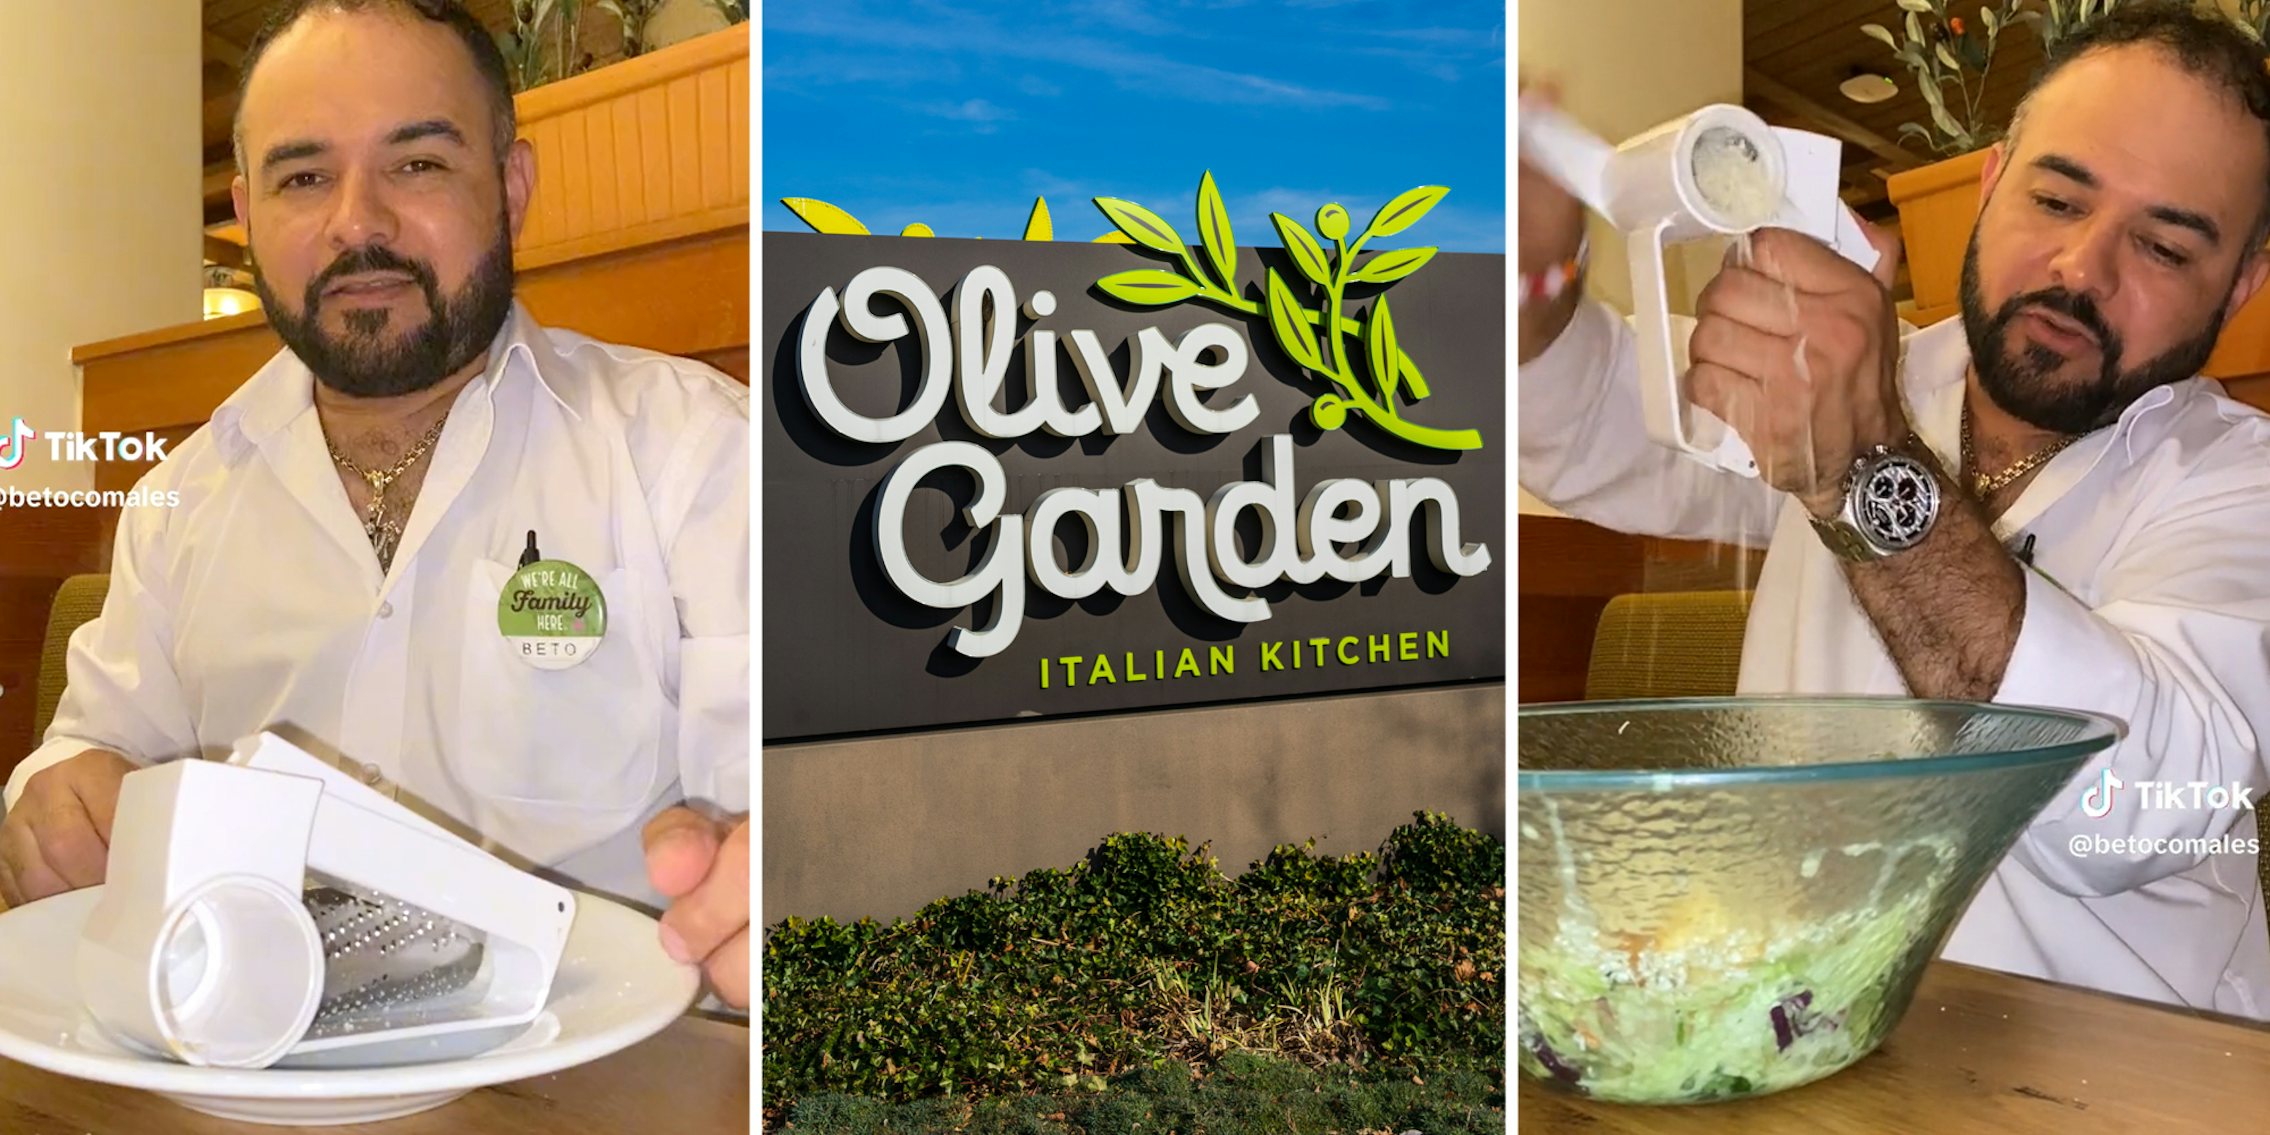 Olive Garden Cheese Grater